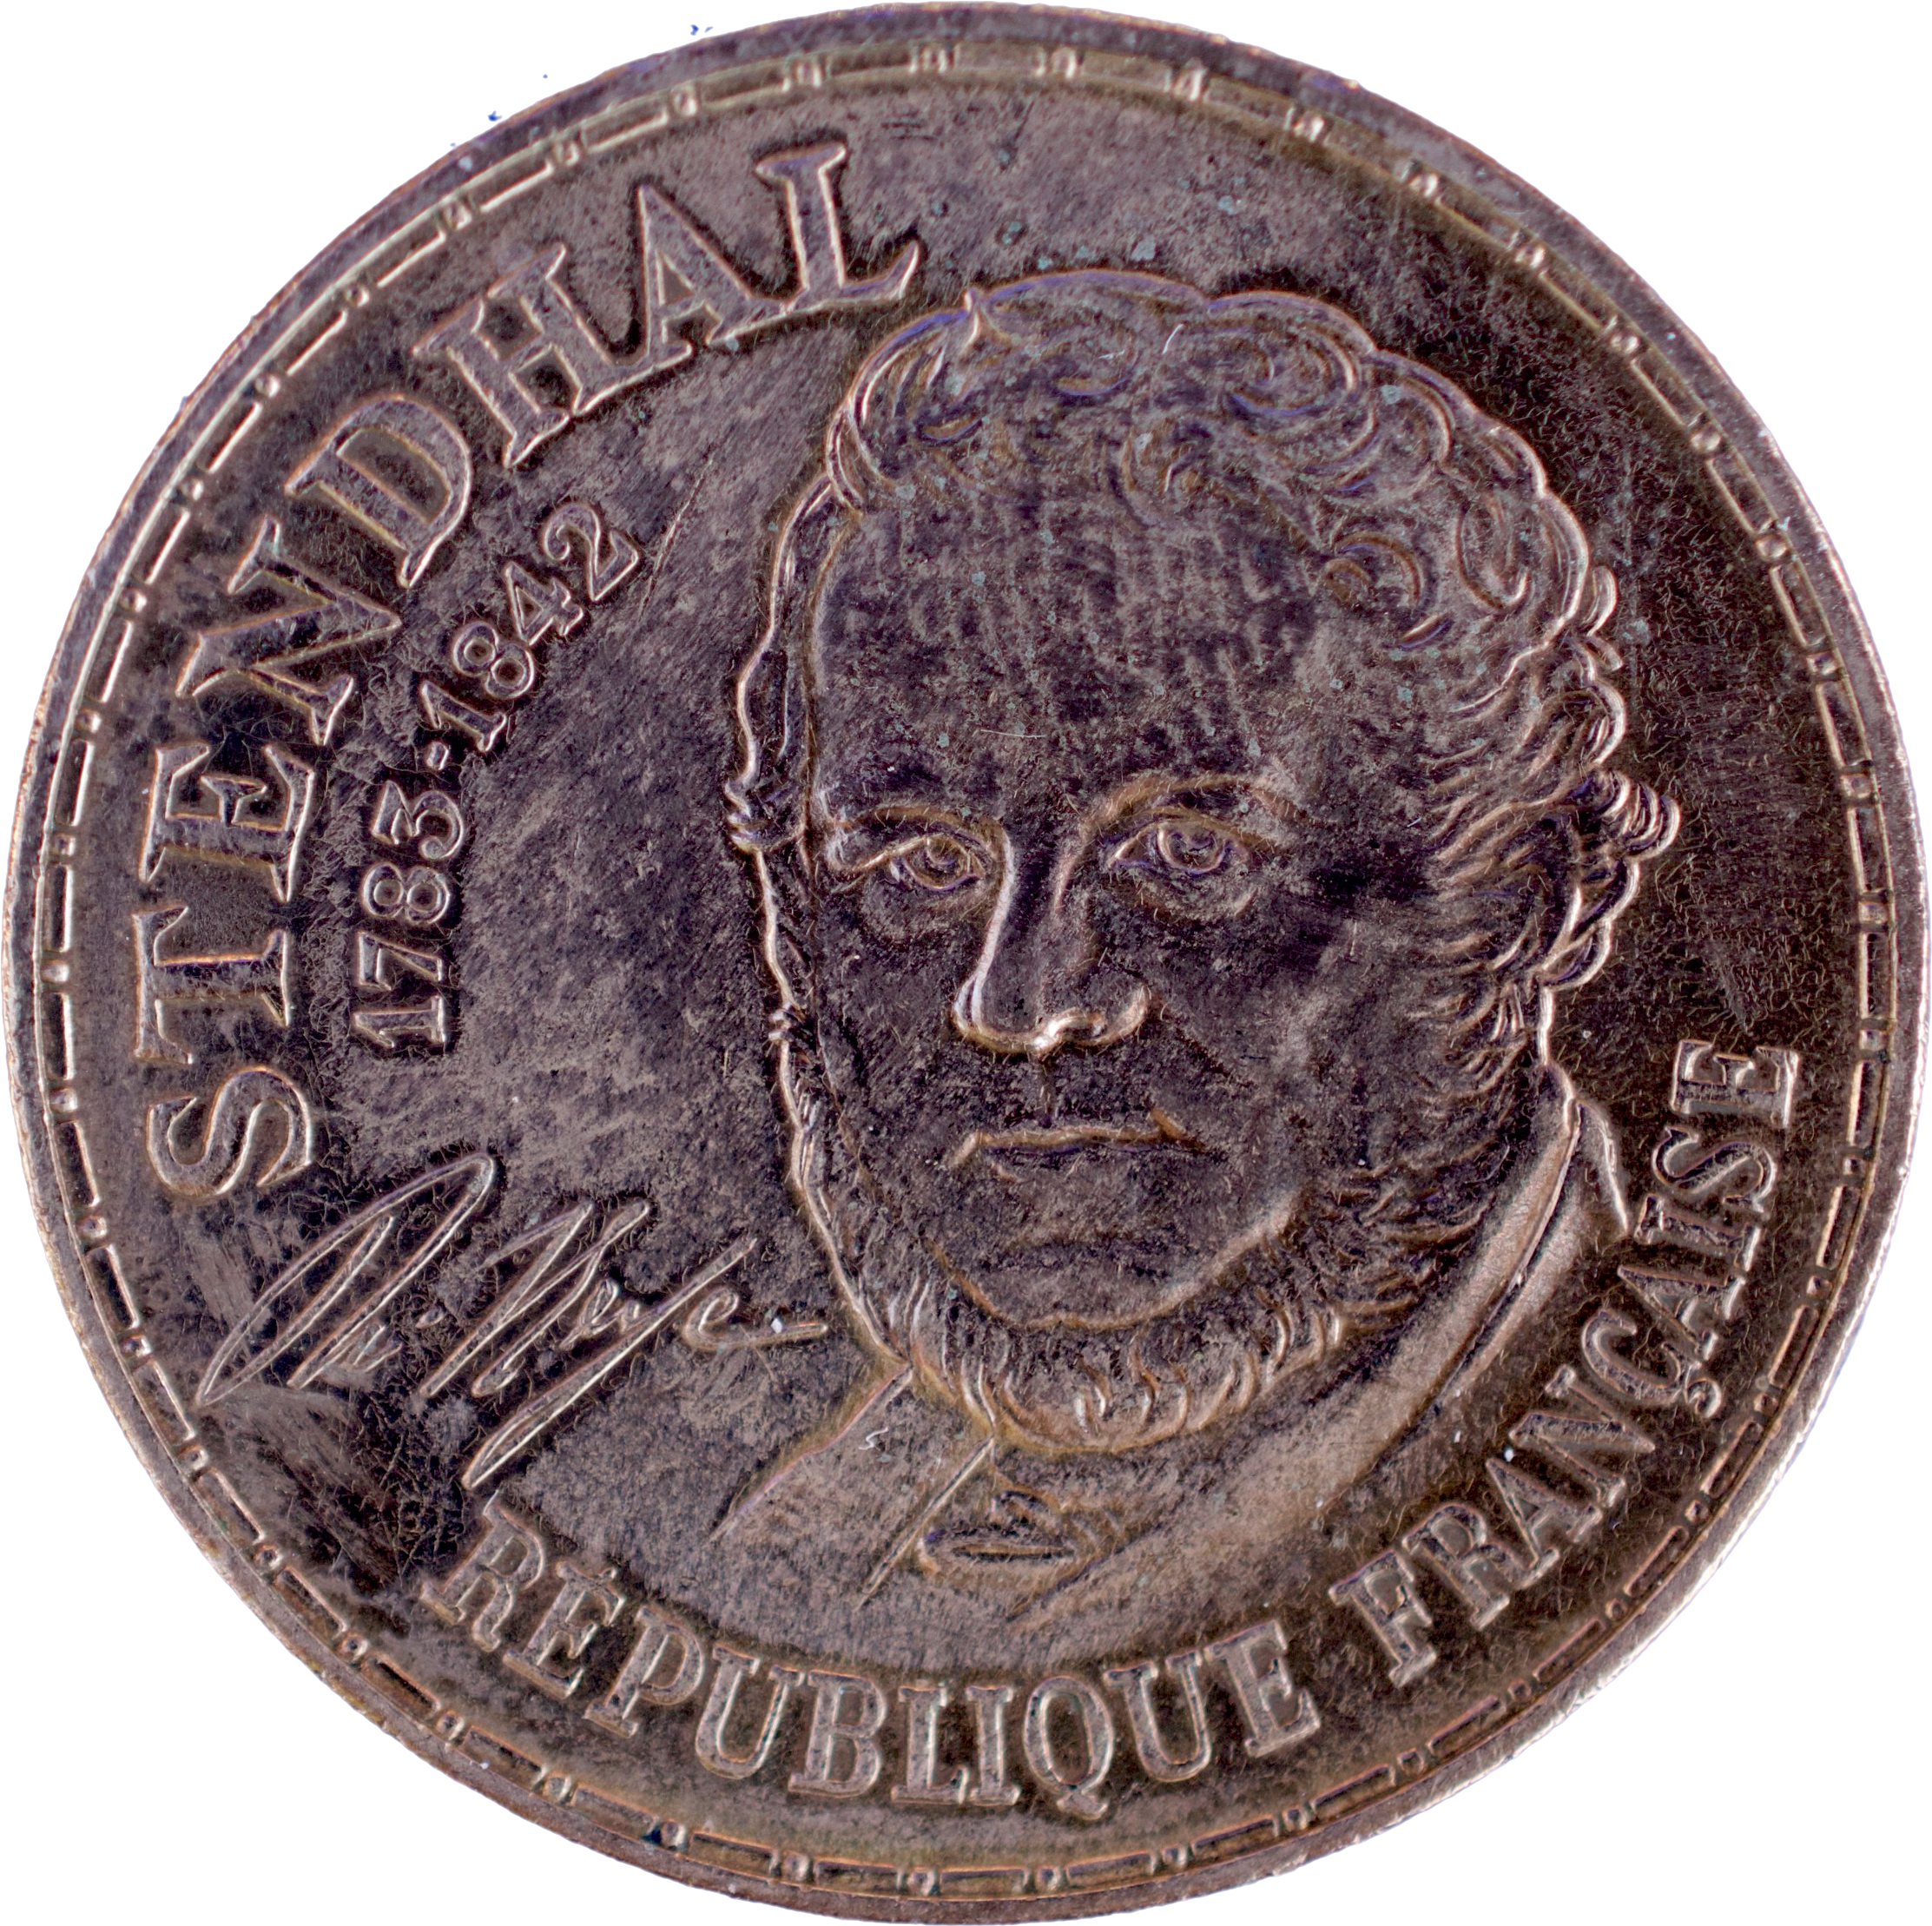 10 francs Stendhal 1983 droit